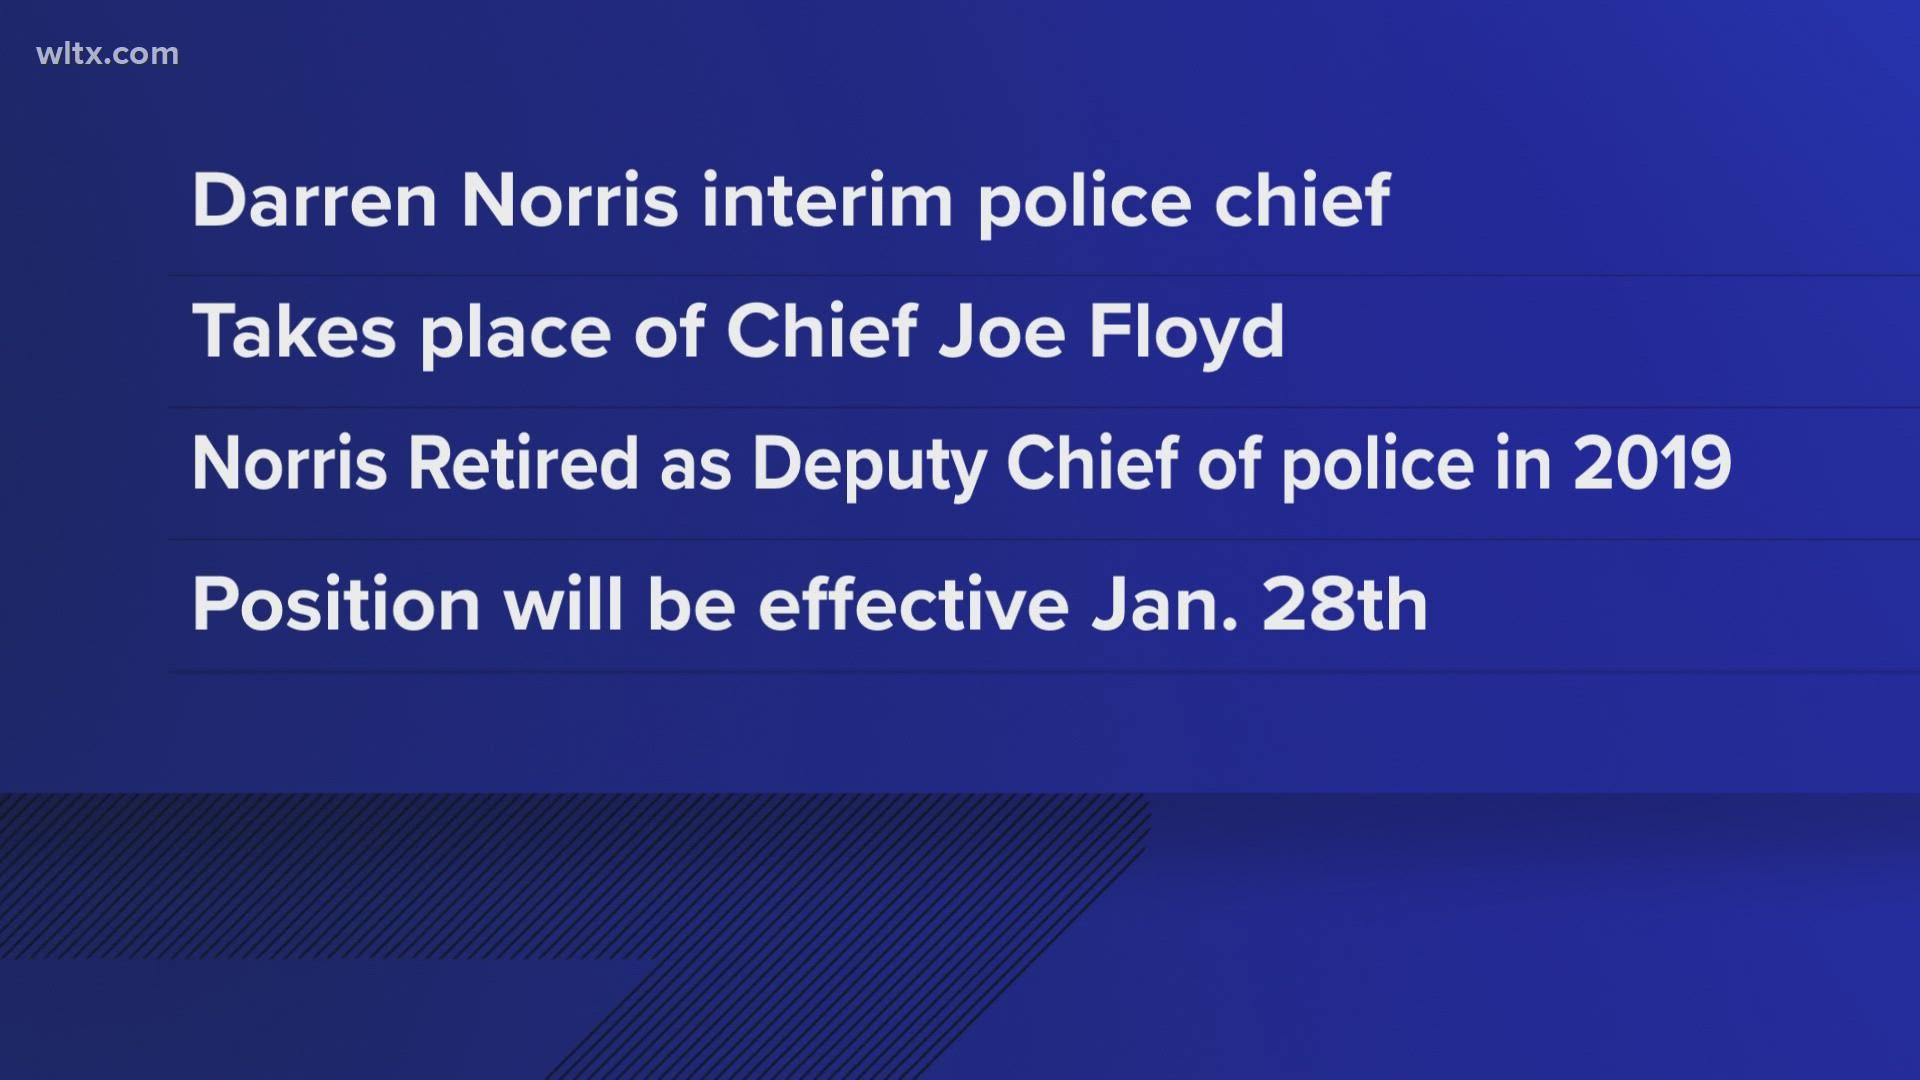 Darren Norris will be the Interim Police Chief after the retirement of Chief Joe Floyd last week.